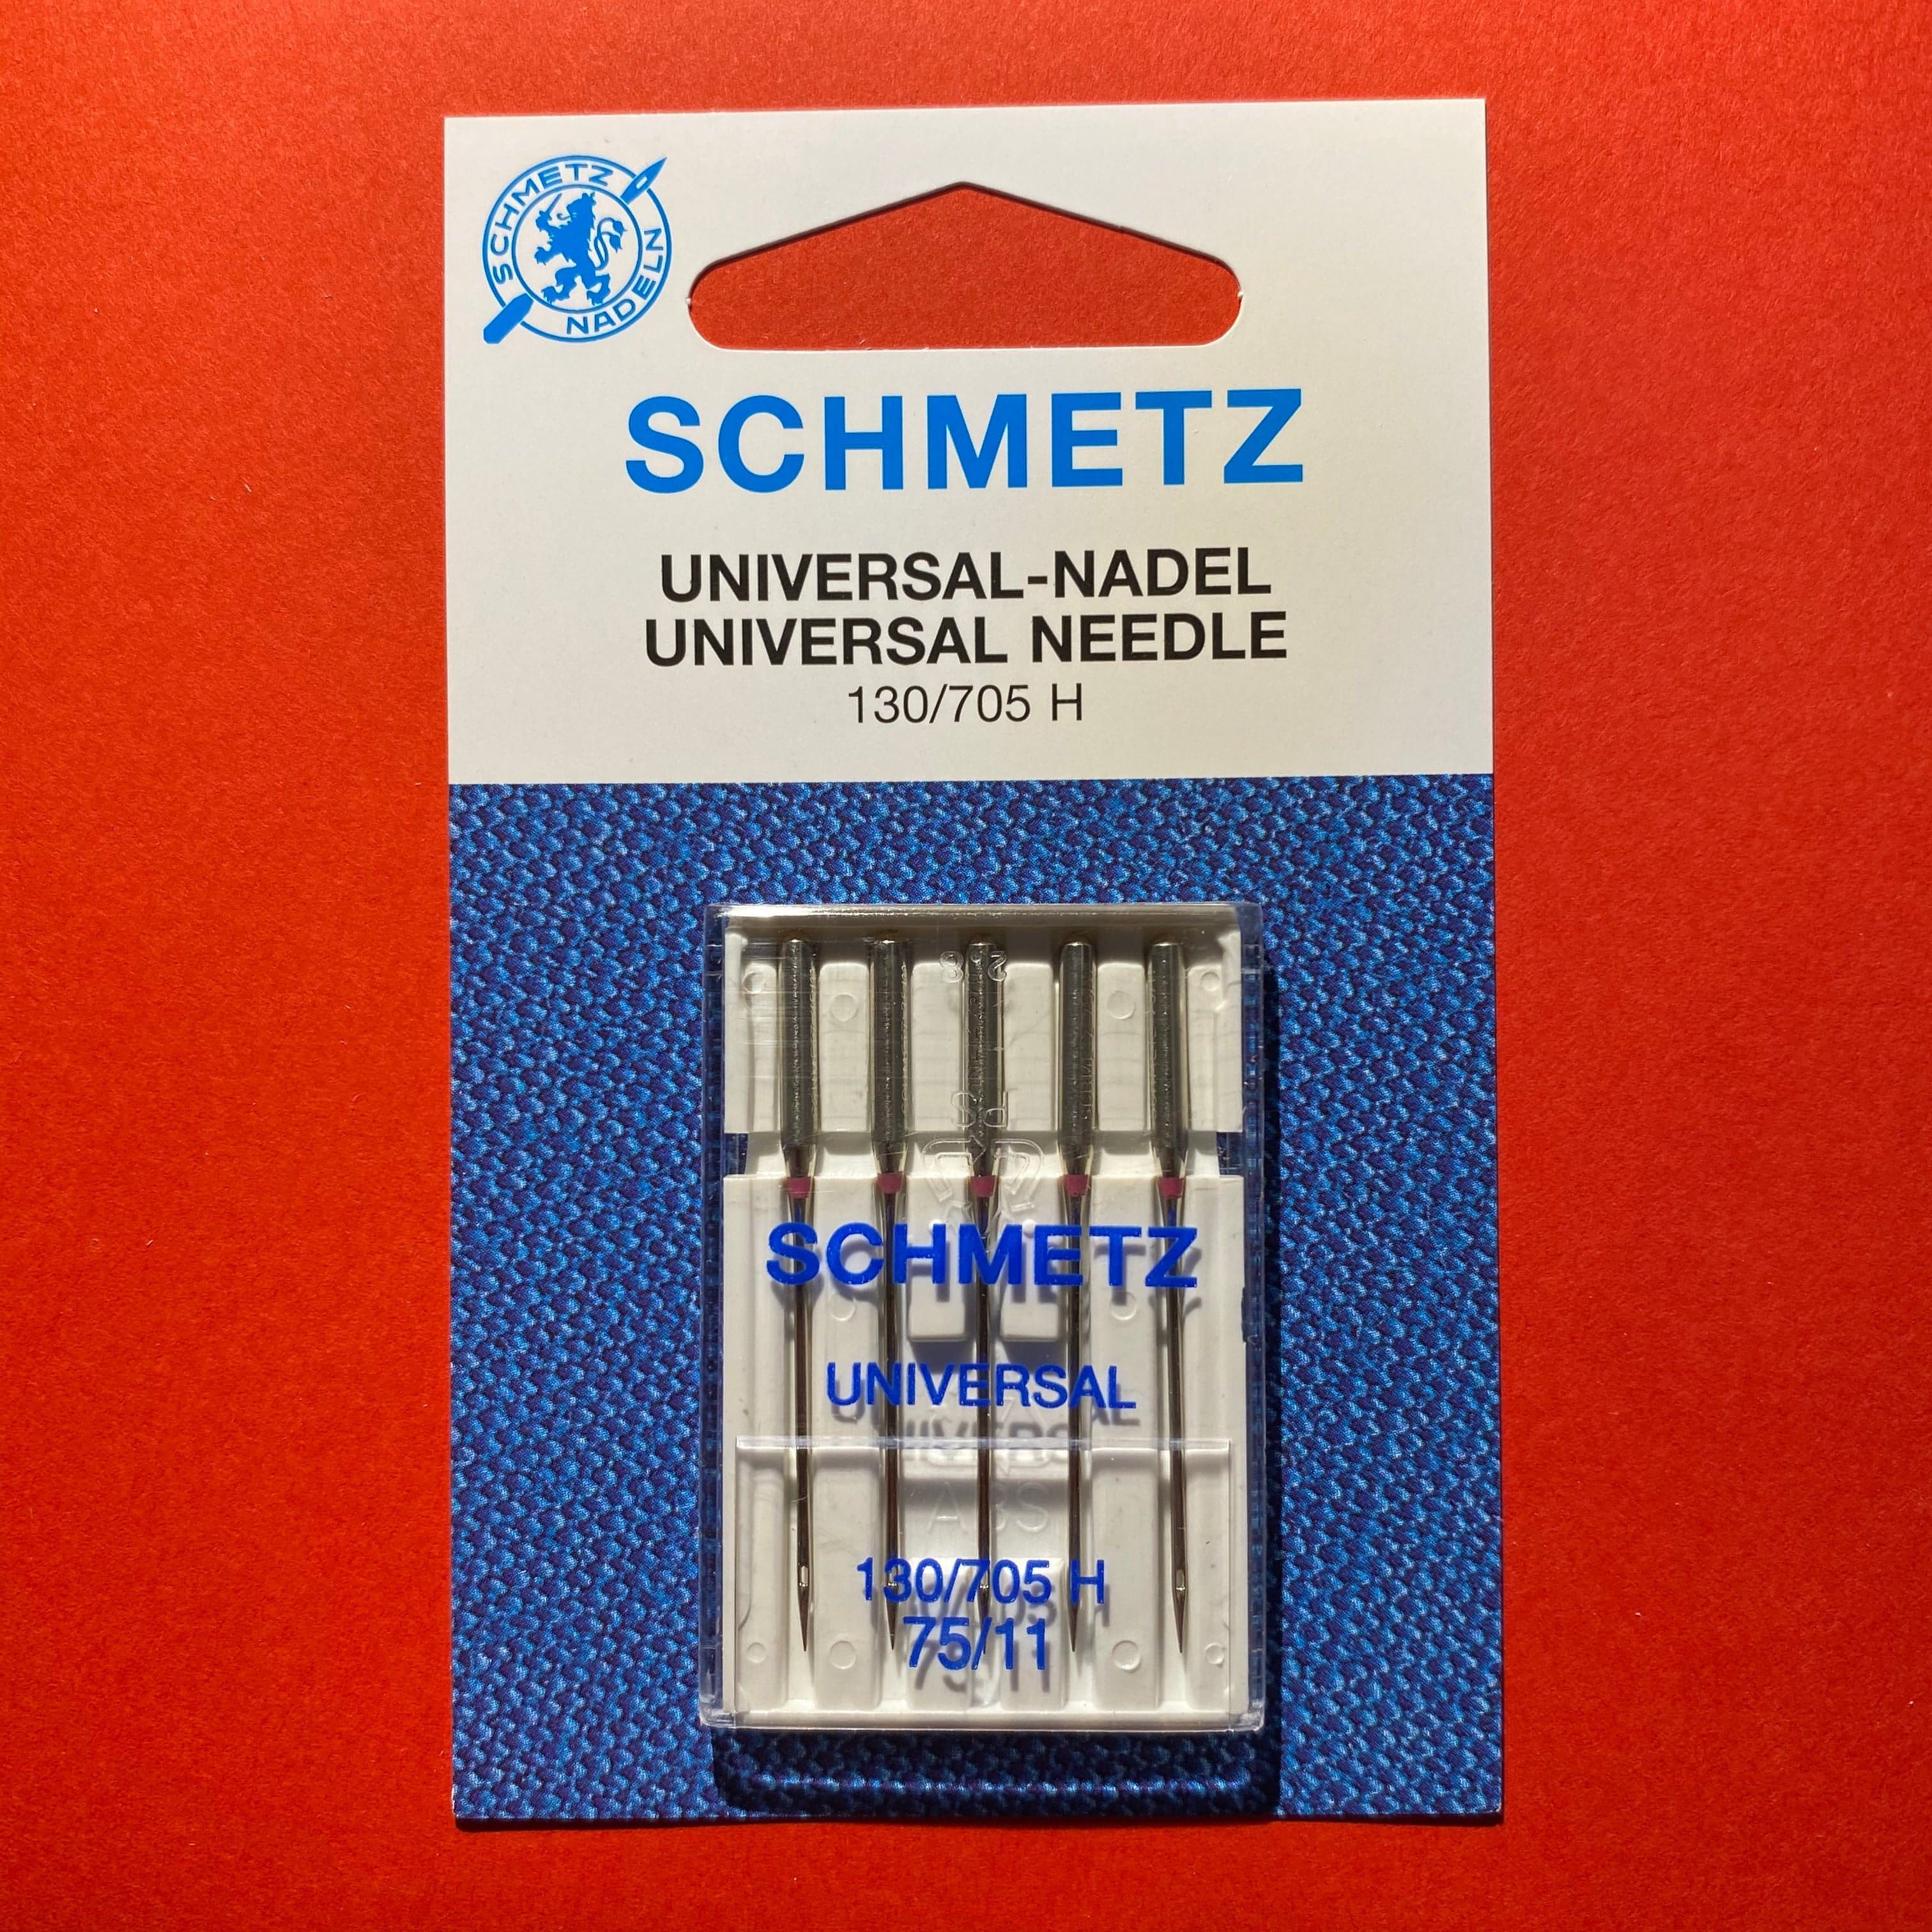 Schmetz Universal Needles 130/705 H 75/11 Lightweight - 5 pack